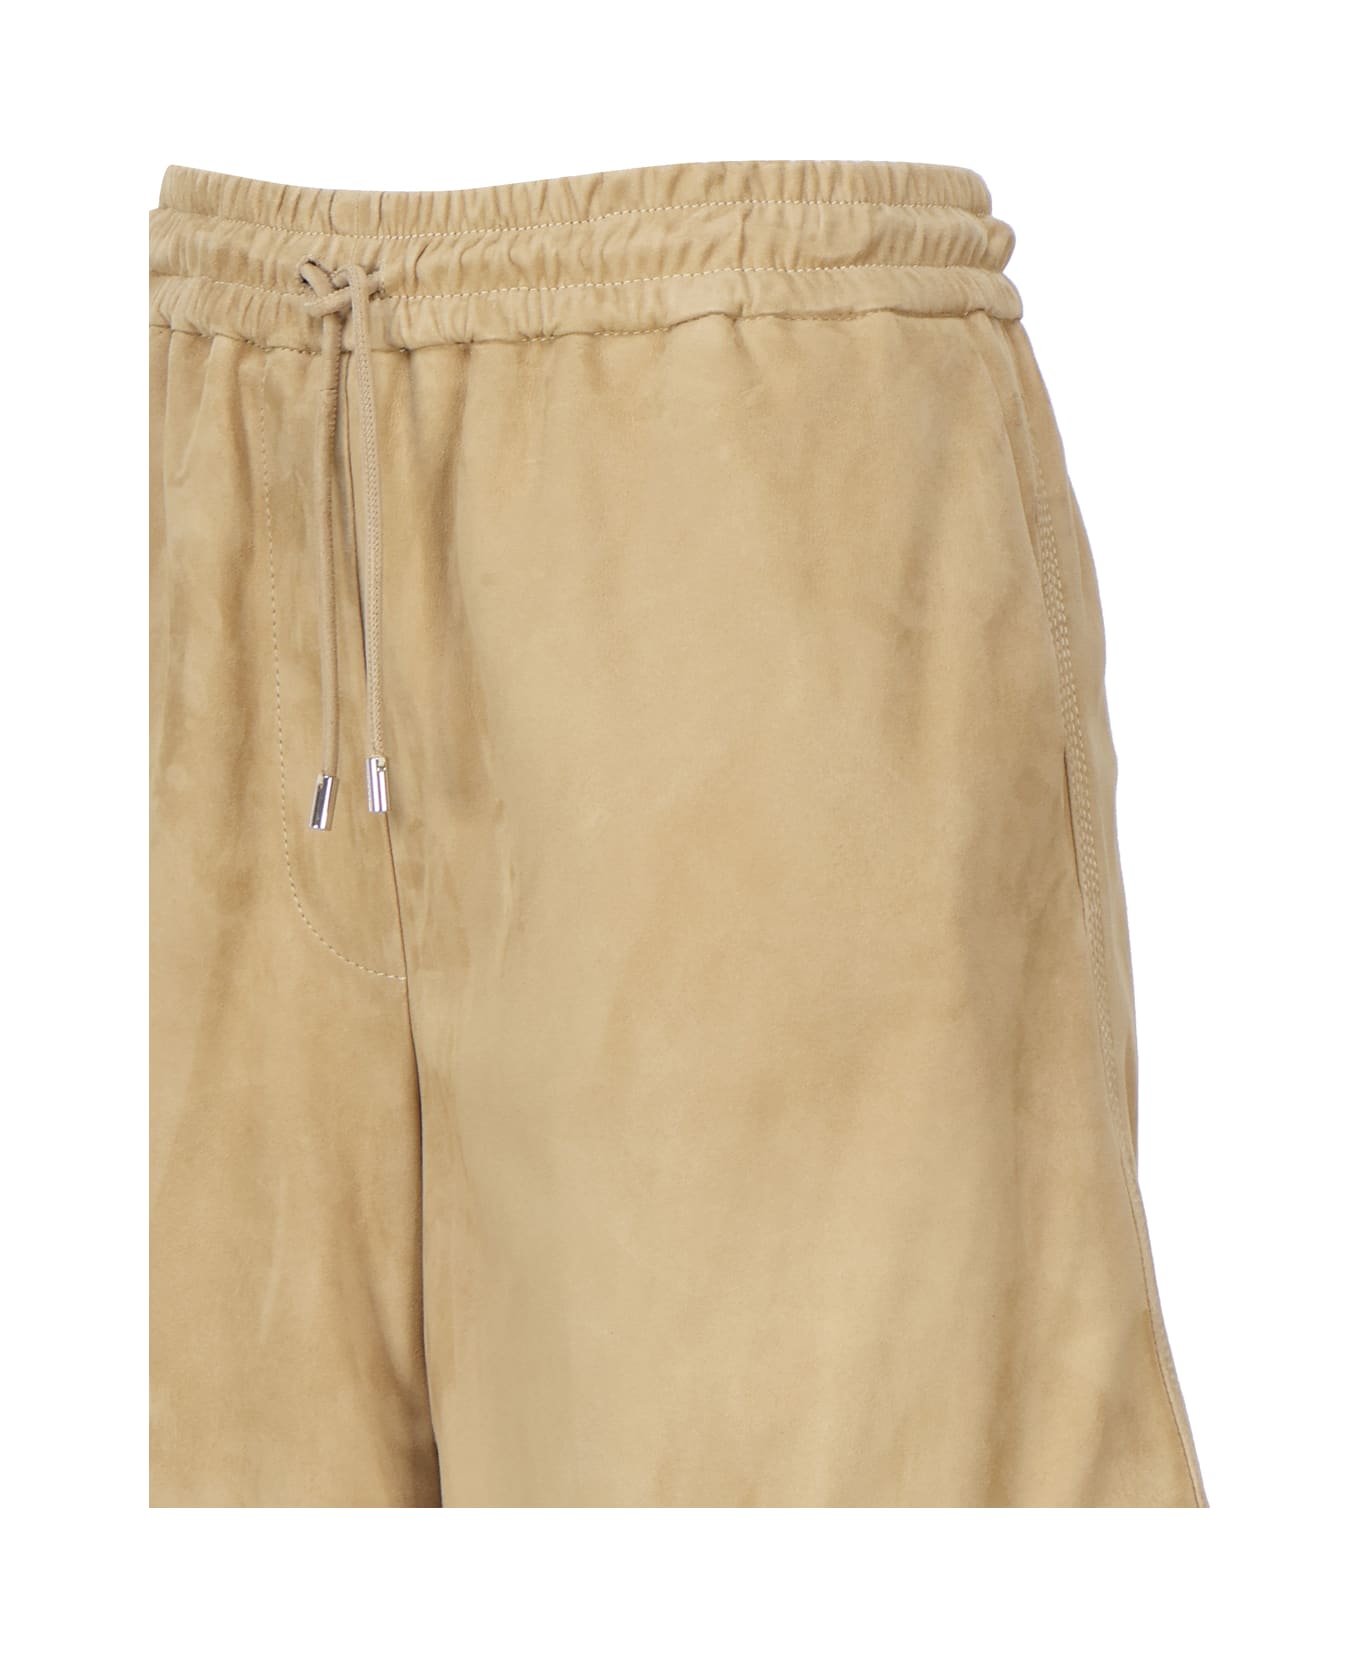 Loewe Suede Shorts - Gold ショートパンツ